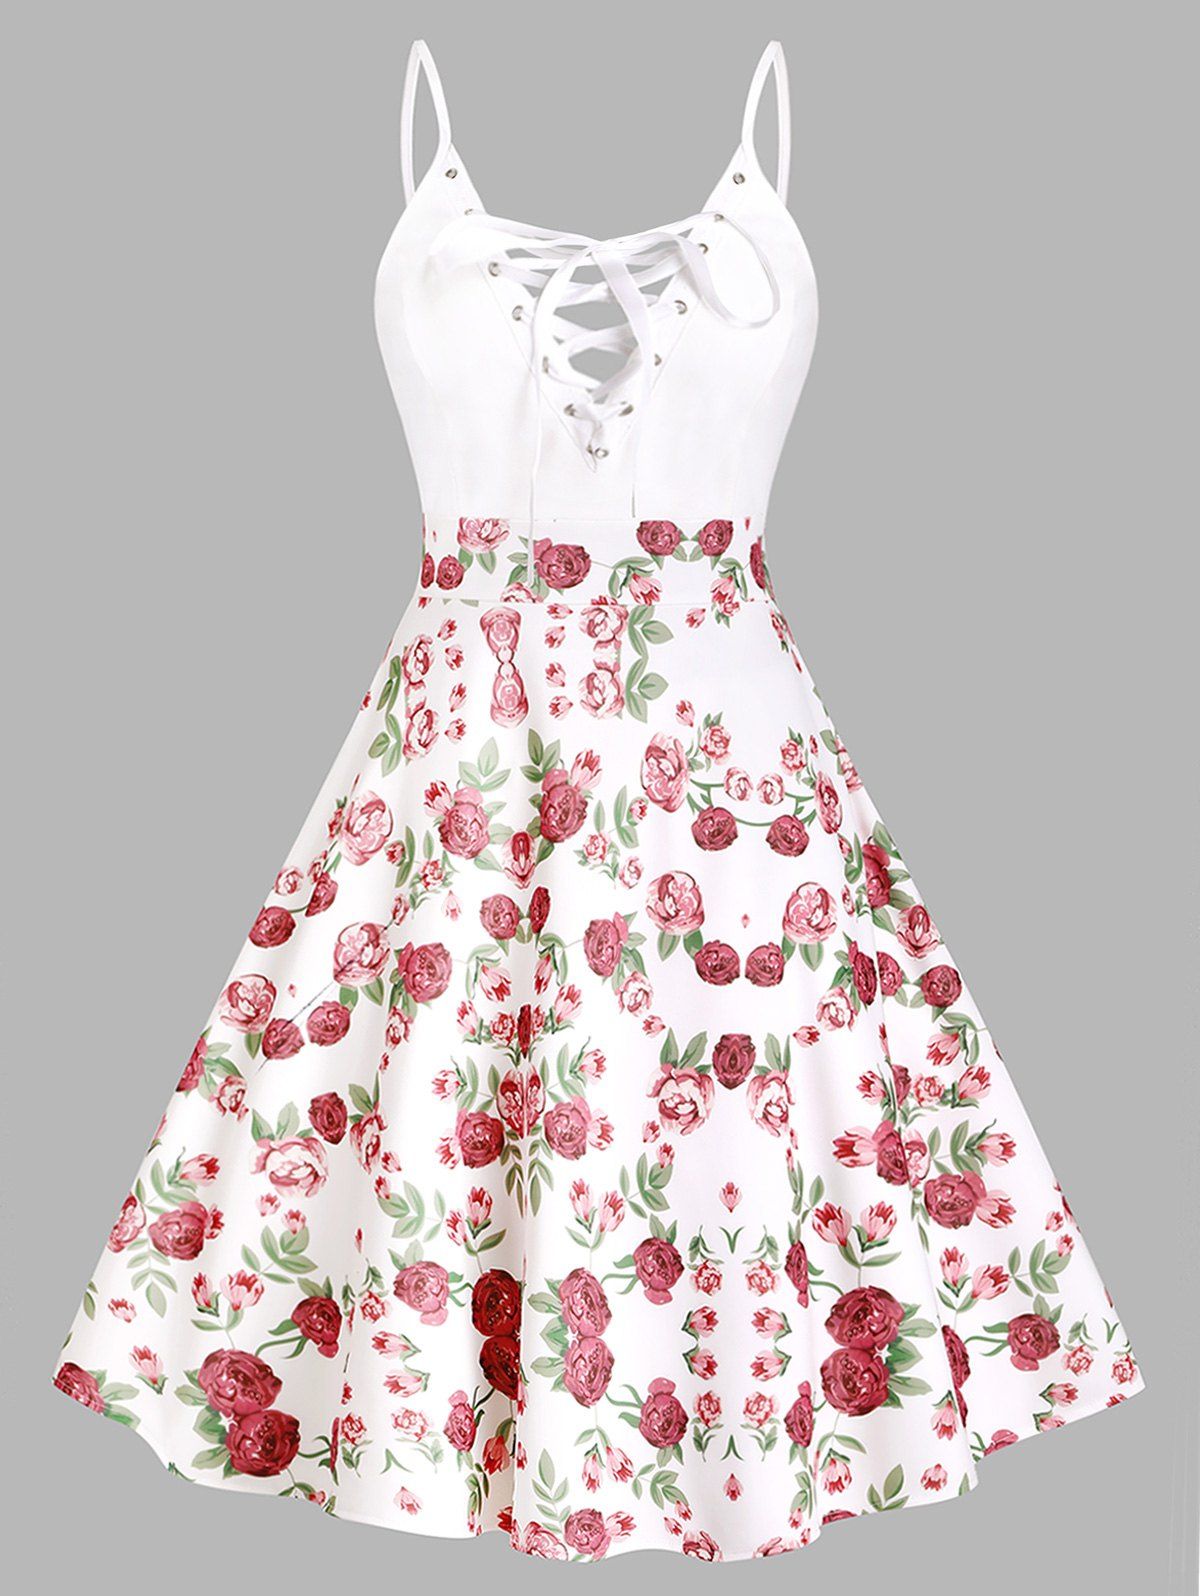 Flower Print Cottagecore A Line Dress Lace Up Spaghetti Strap Cami Dress - LIGHT PINK 2XL